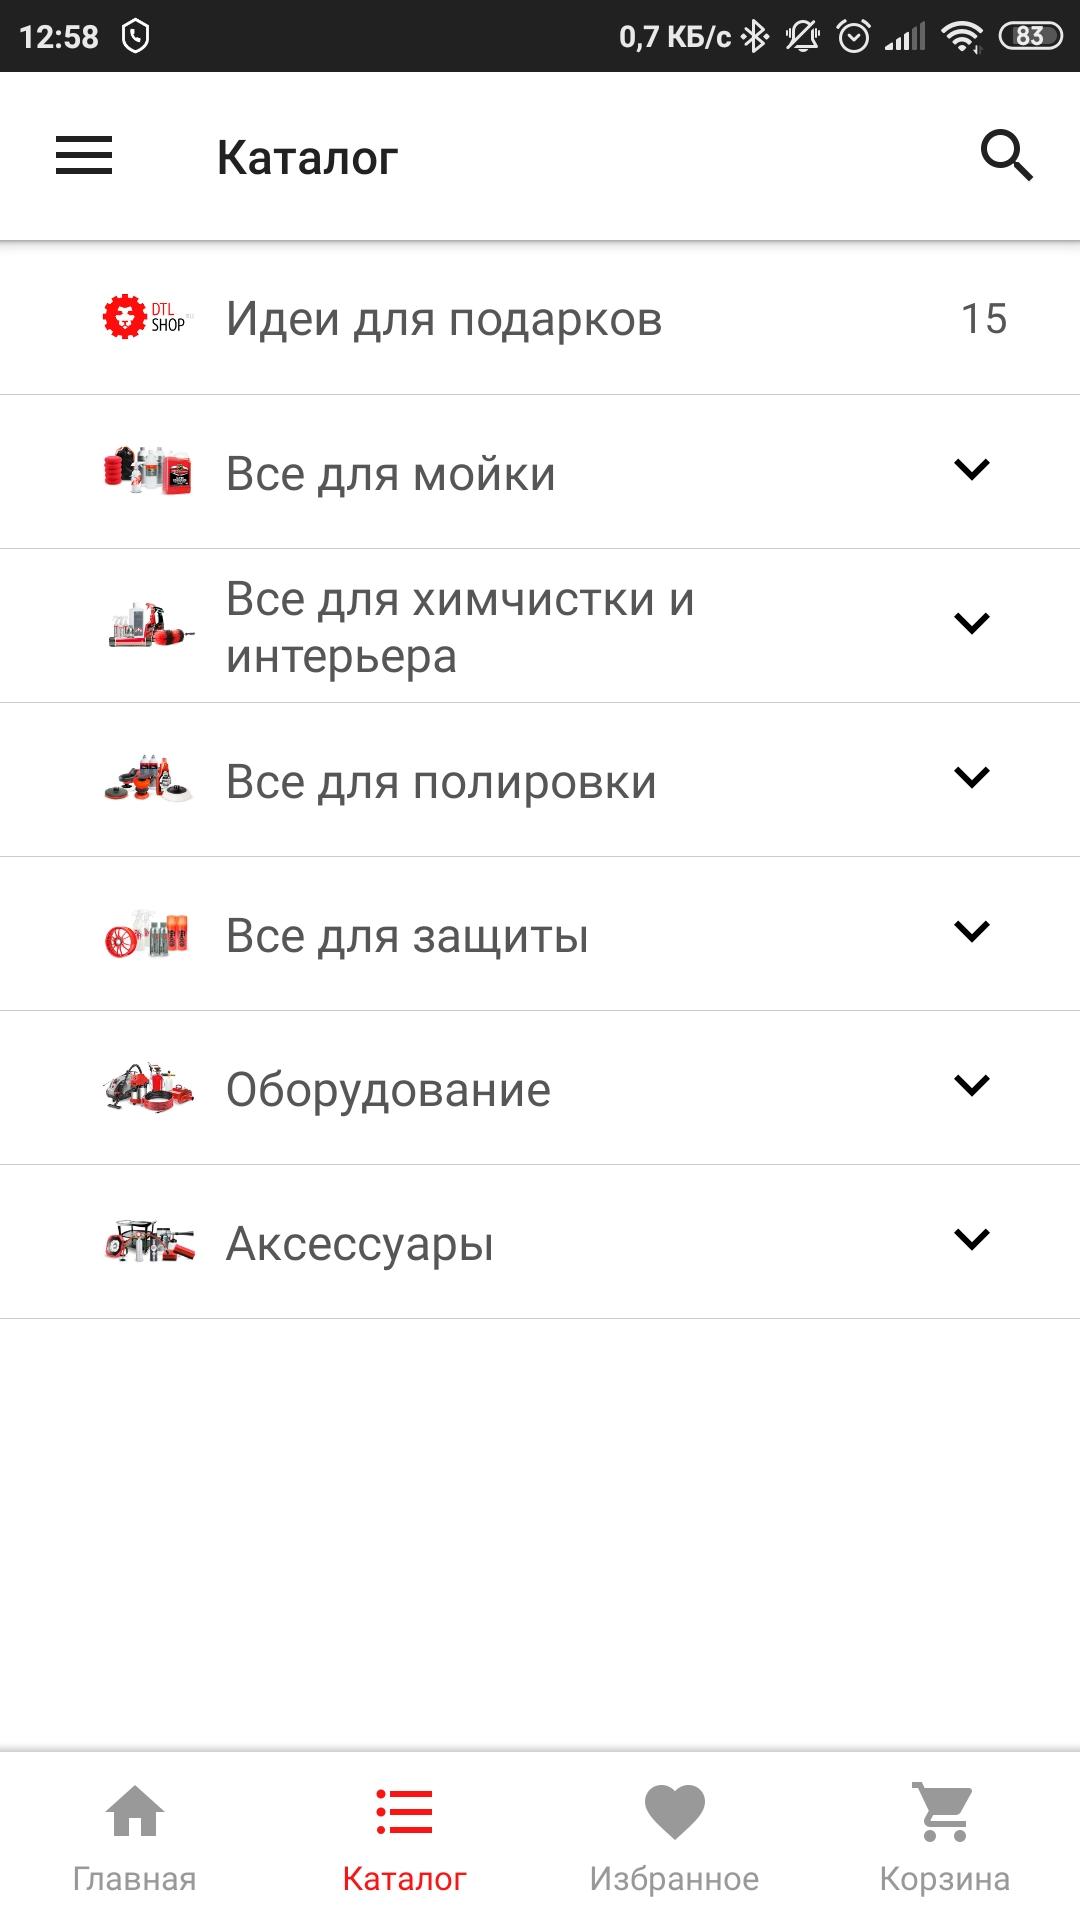 DTLshop.ru - detaling market 4.177.A.0 Screenshot 17